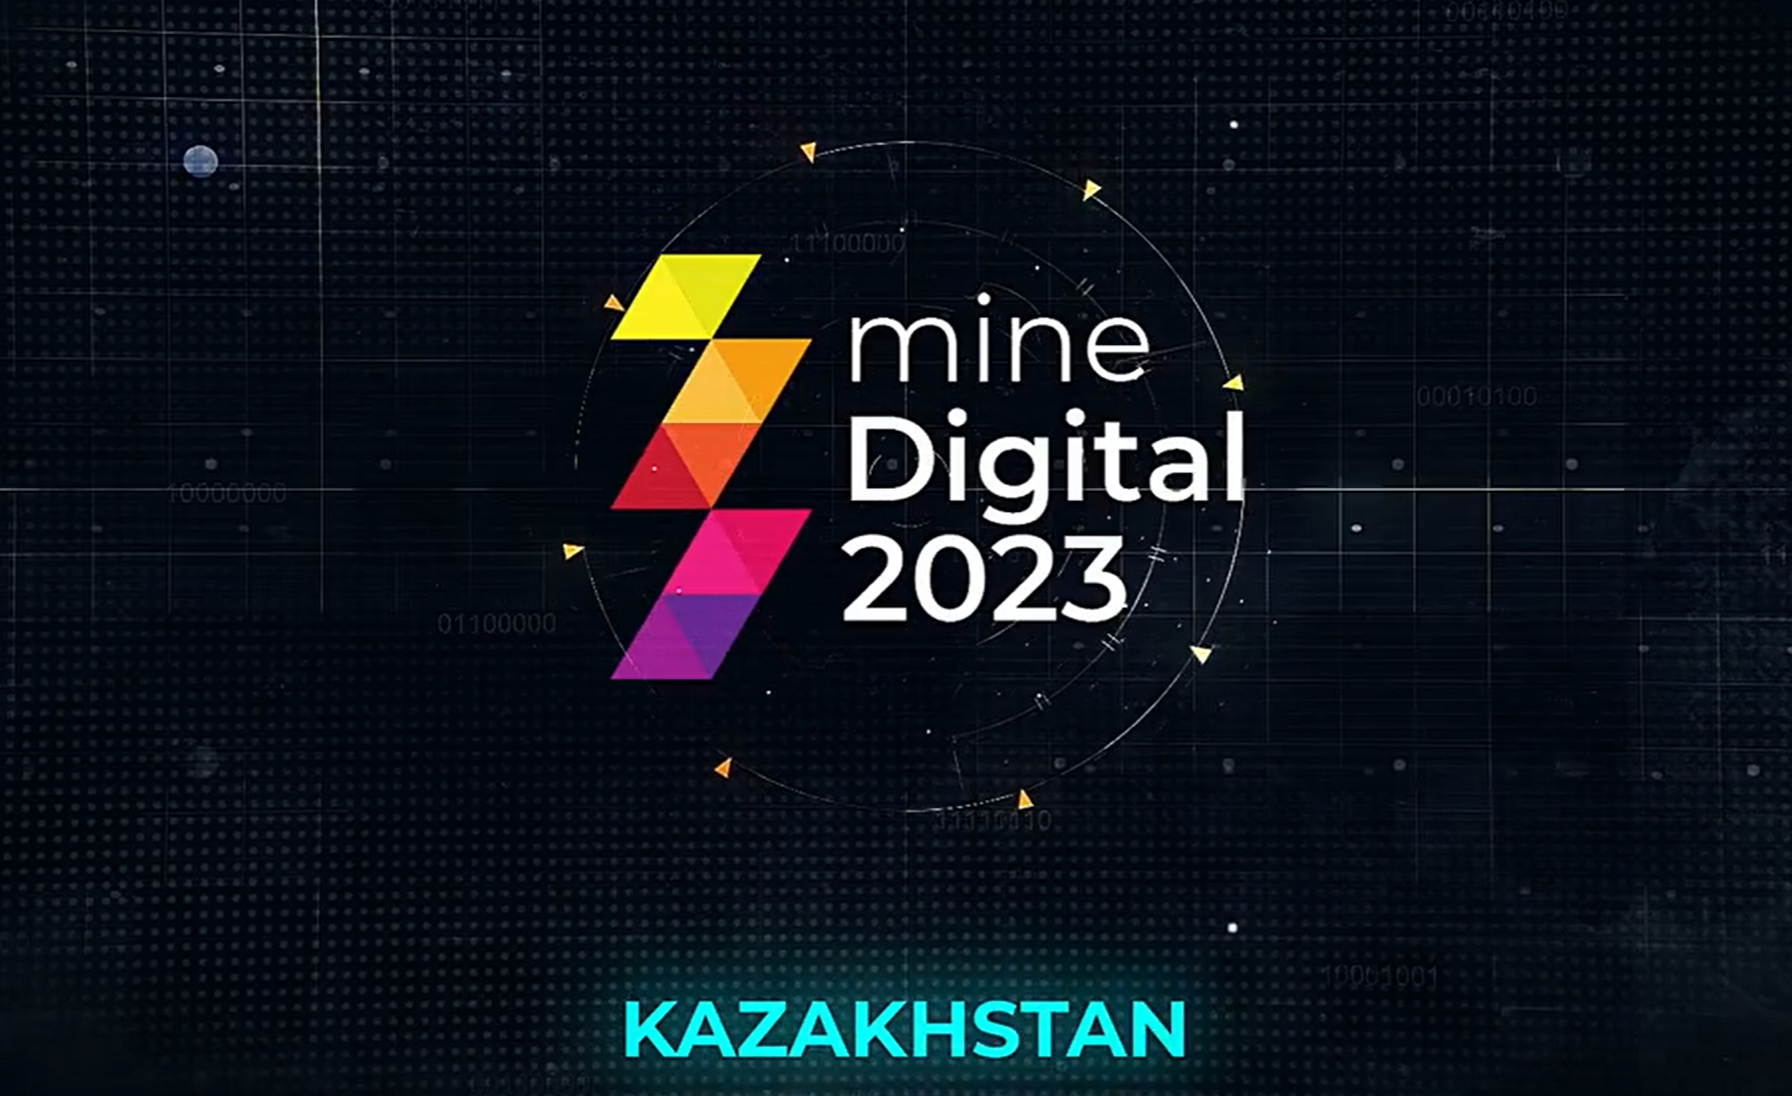 Kazakhstan's second MineDigital competition